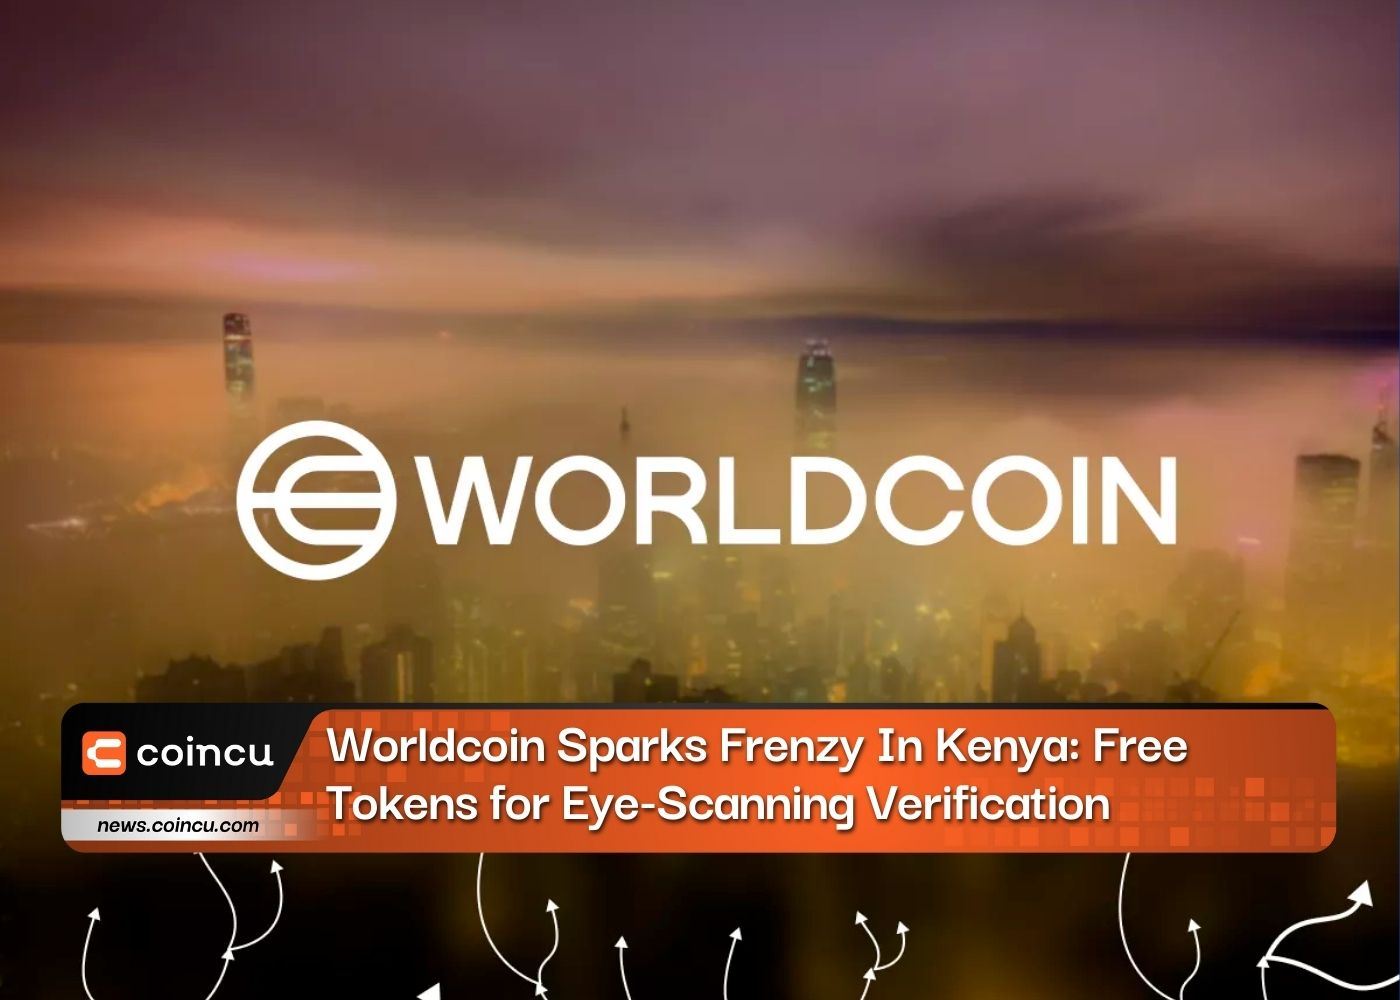 Worldcoin Sparks Frenzy In Kenya: Free Tokens for Eye-Scanning Verification